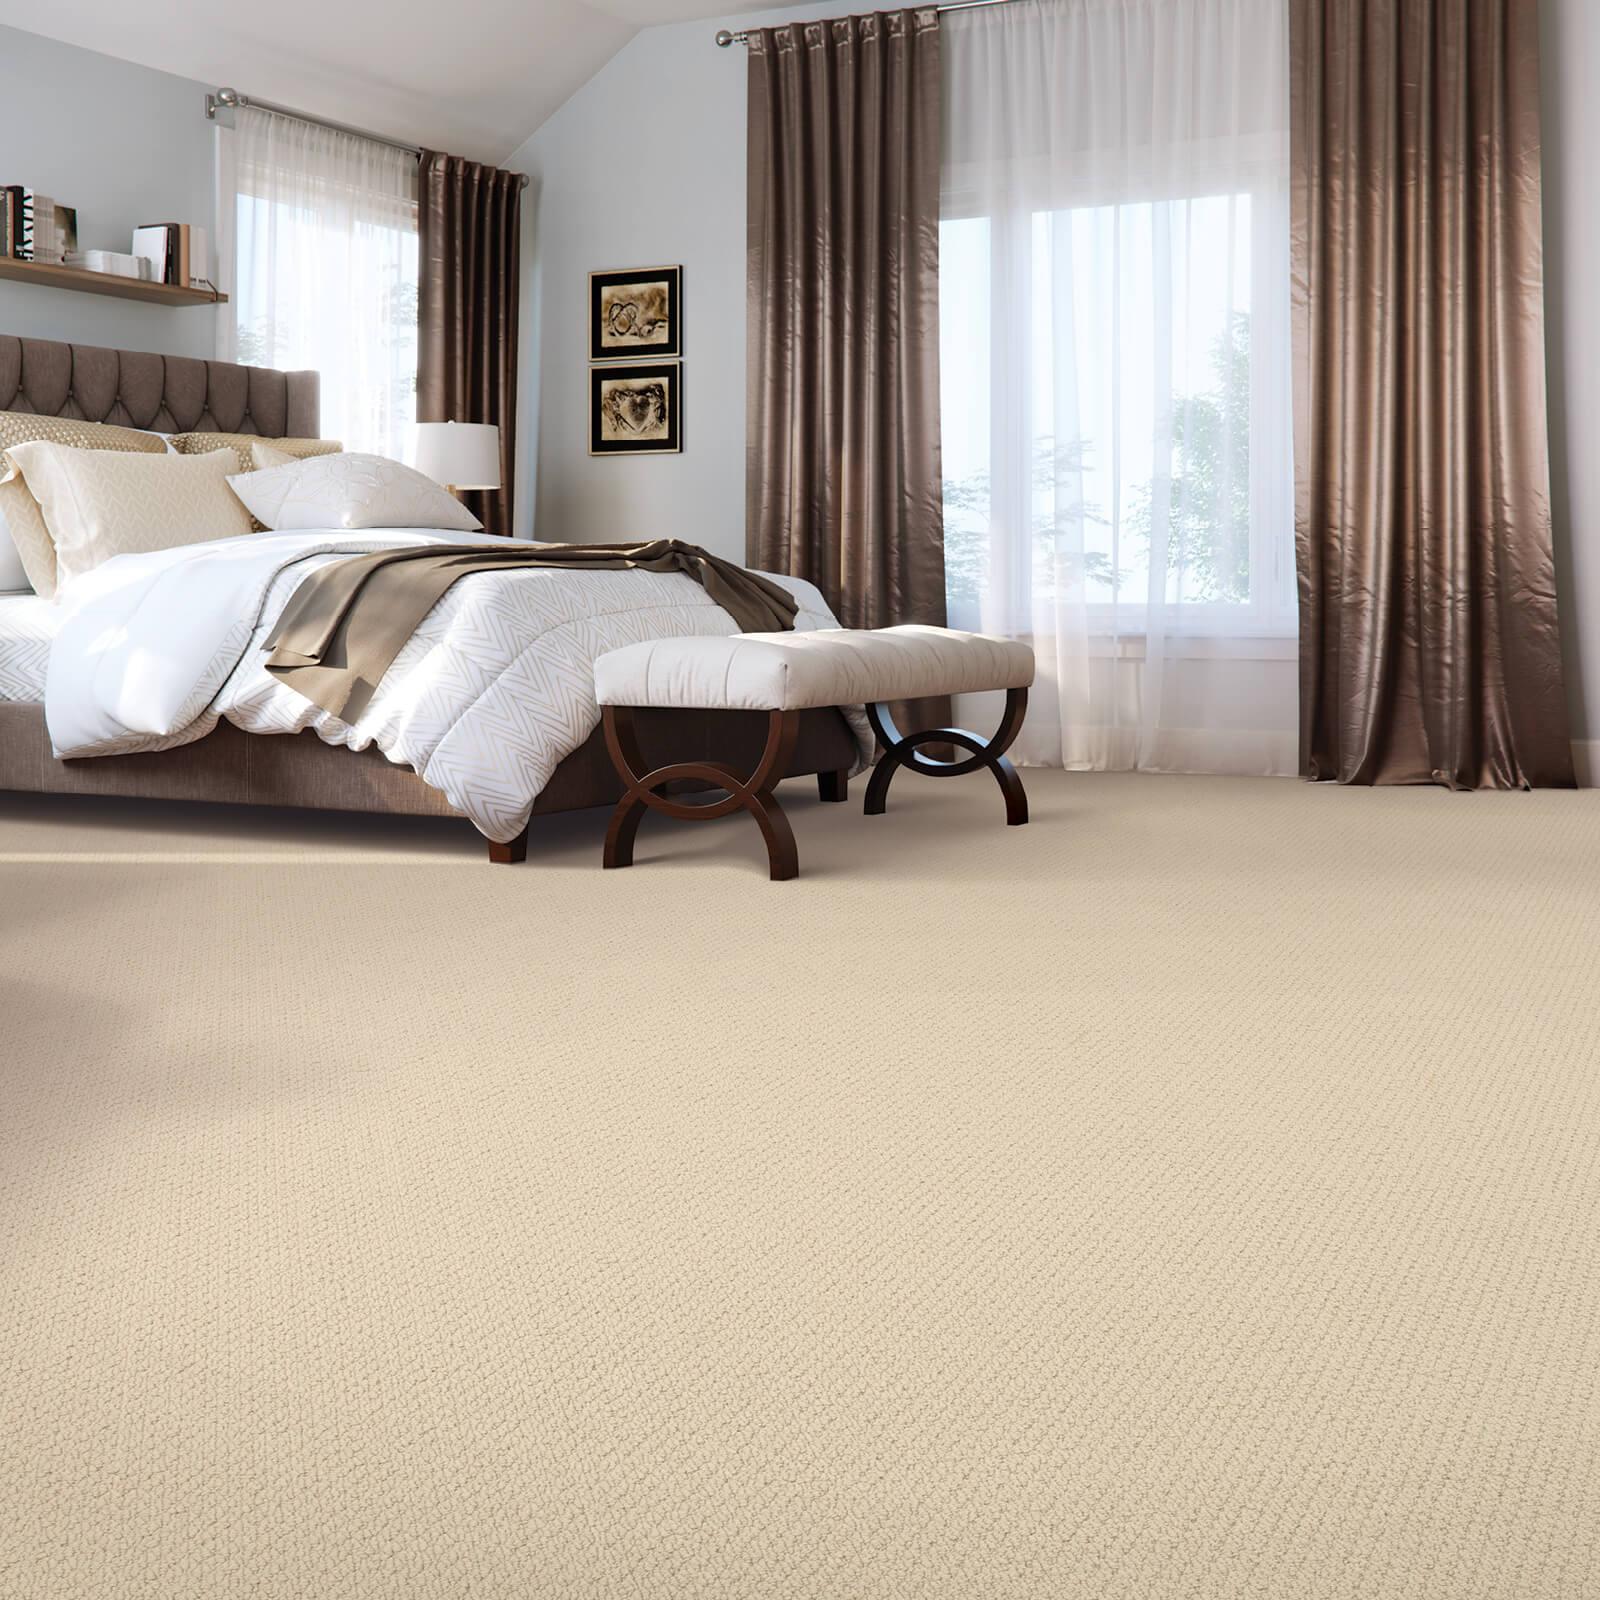 New carpet for bedroom | Flooring Direct